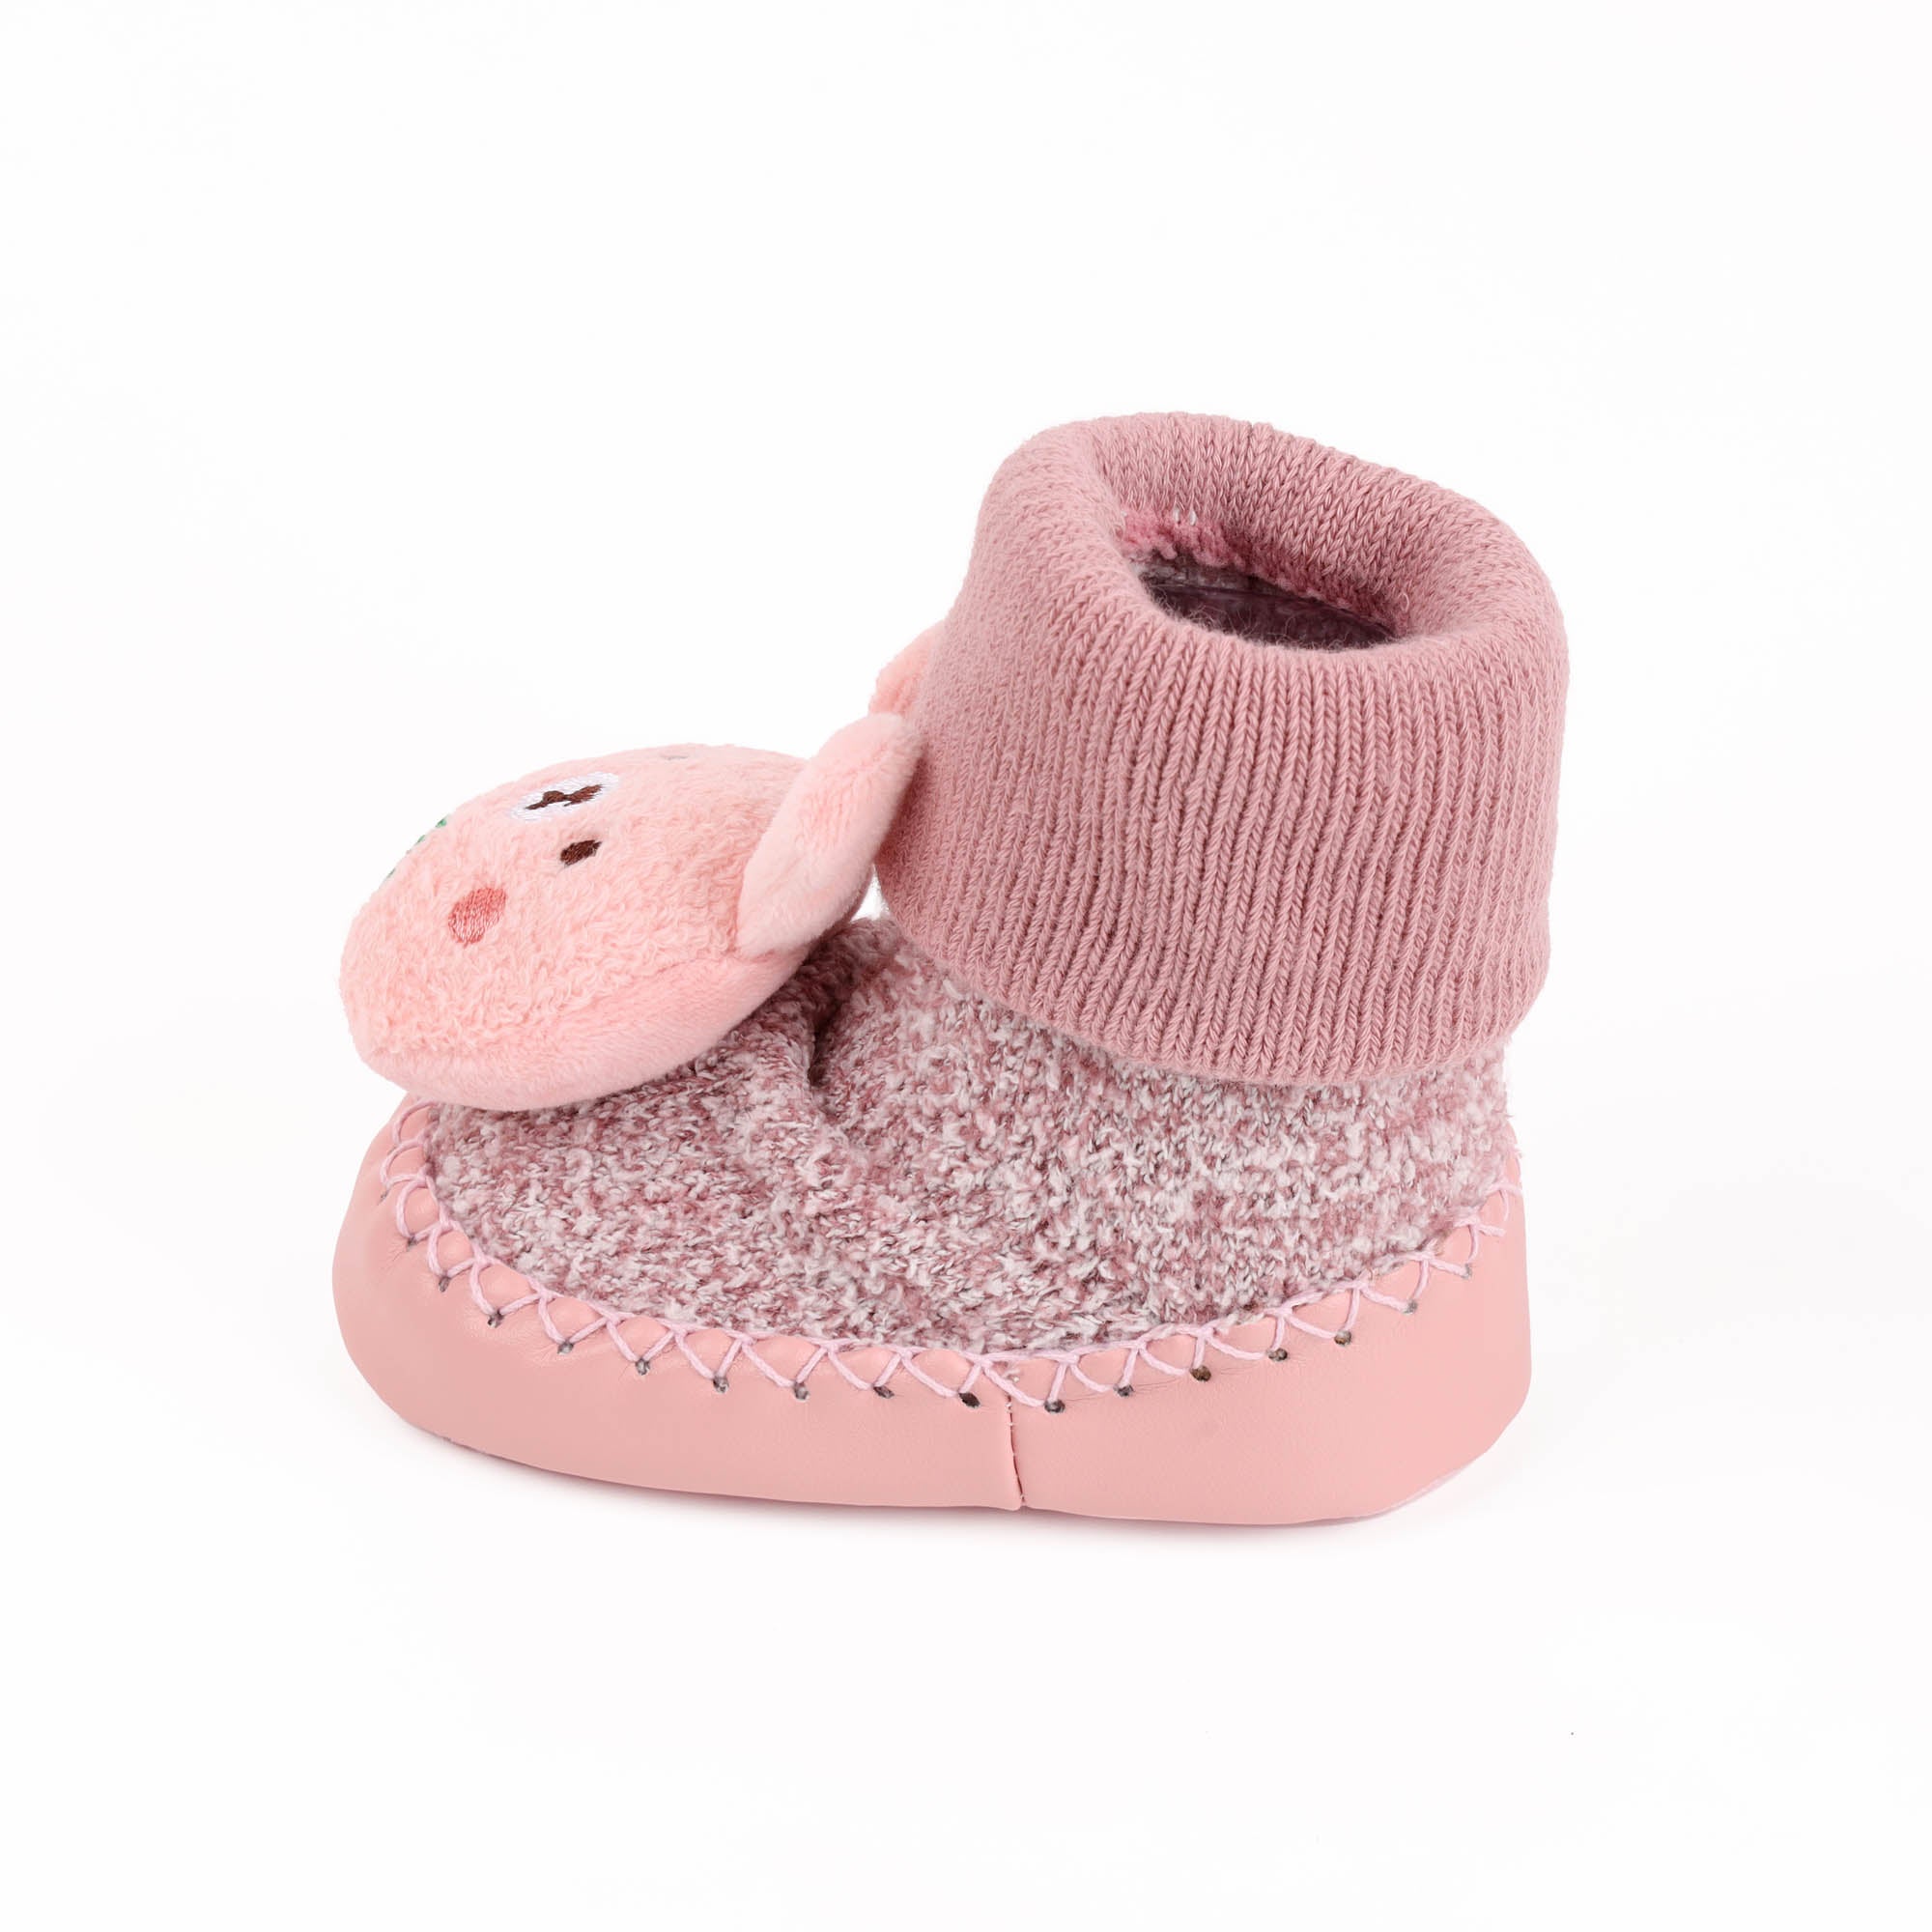 Kicks & Crawl- Pink Bunny Baby Booties